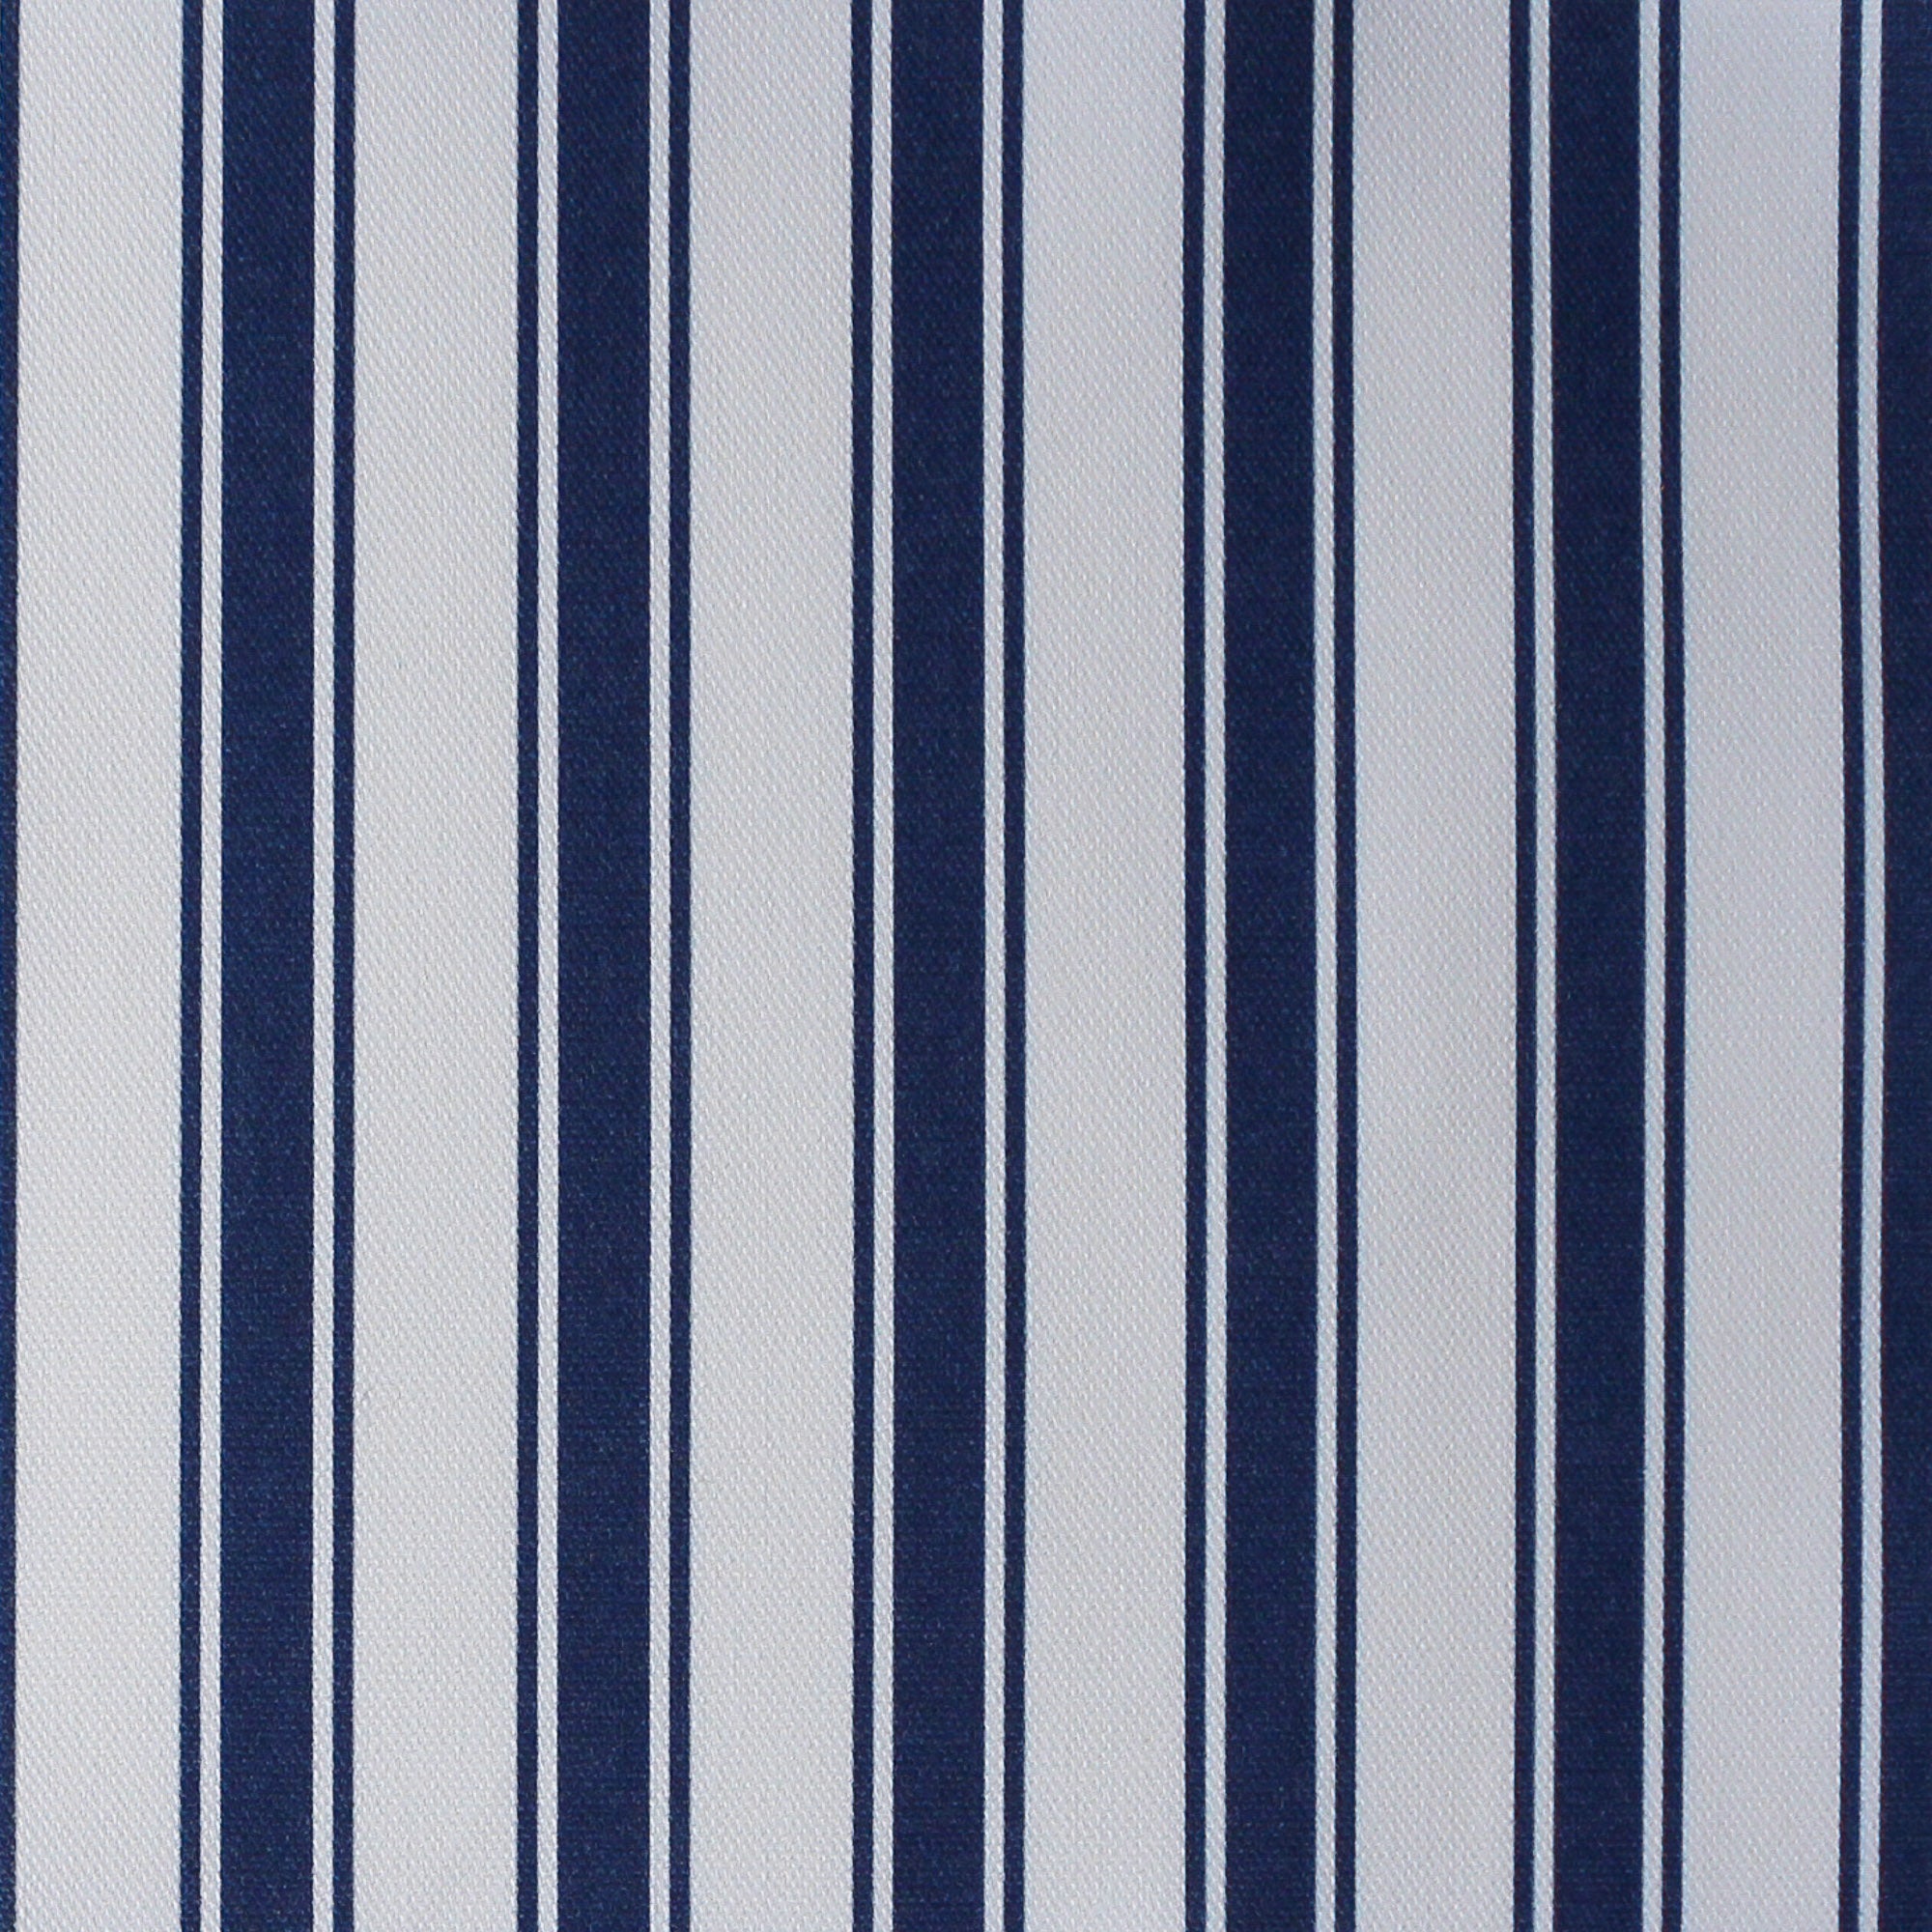 Regatta Stripe Fabric - Navy - Hydrangea Lane Home